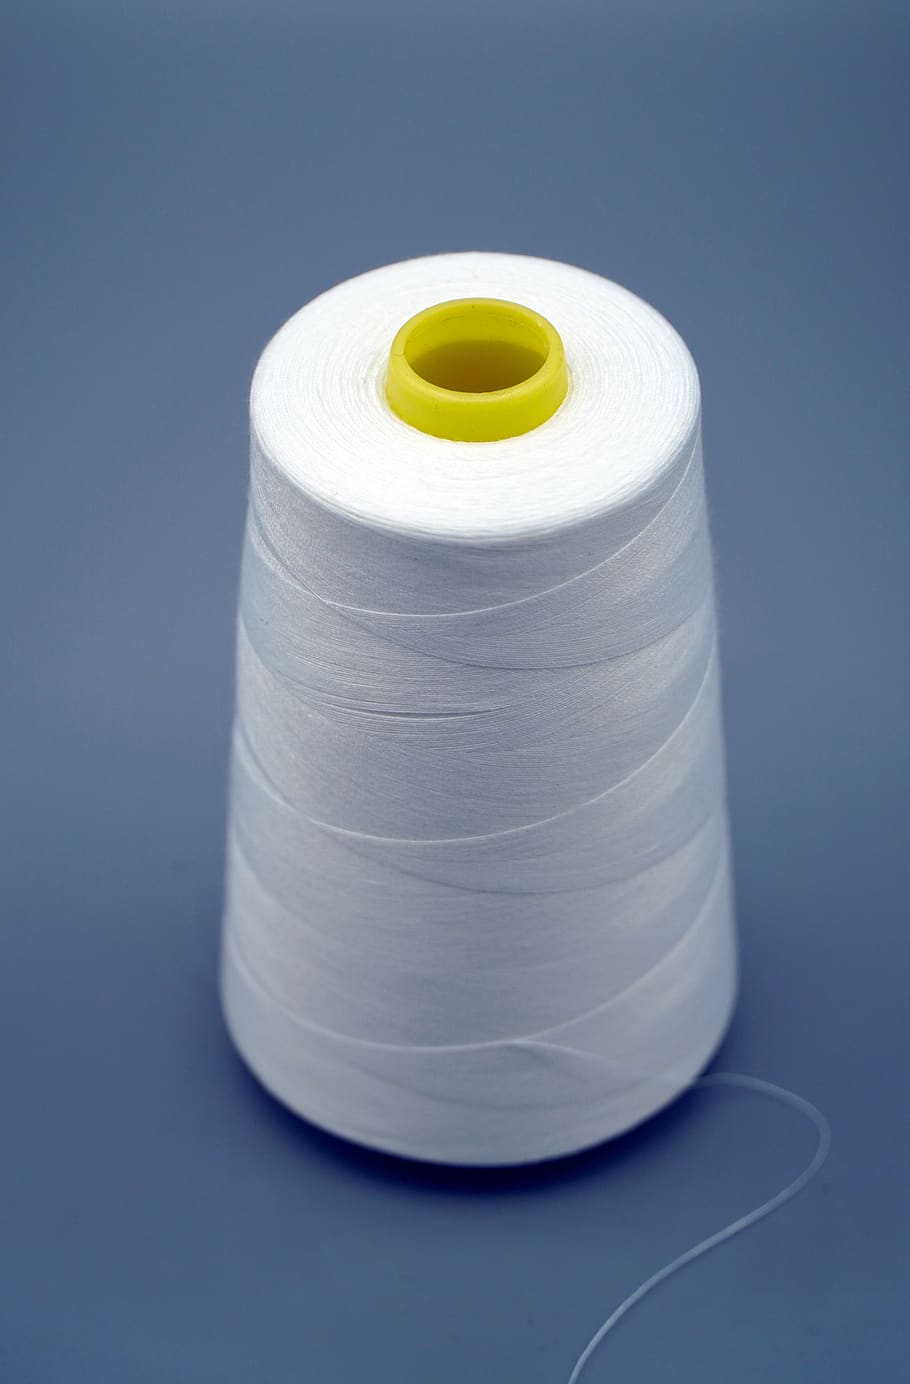 yarn, role, sew, thread, sewing thread, thread spool, sewing kits, tailoring, nähutensilien, indoors